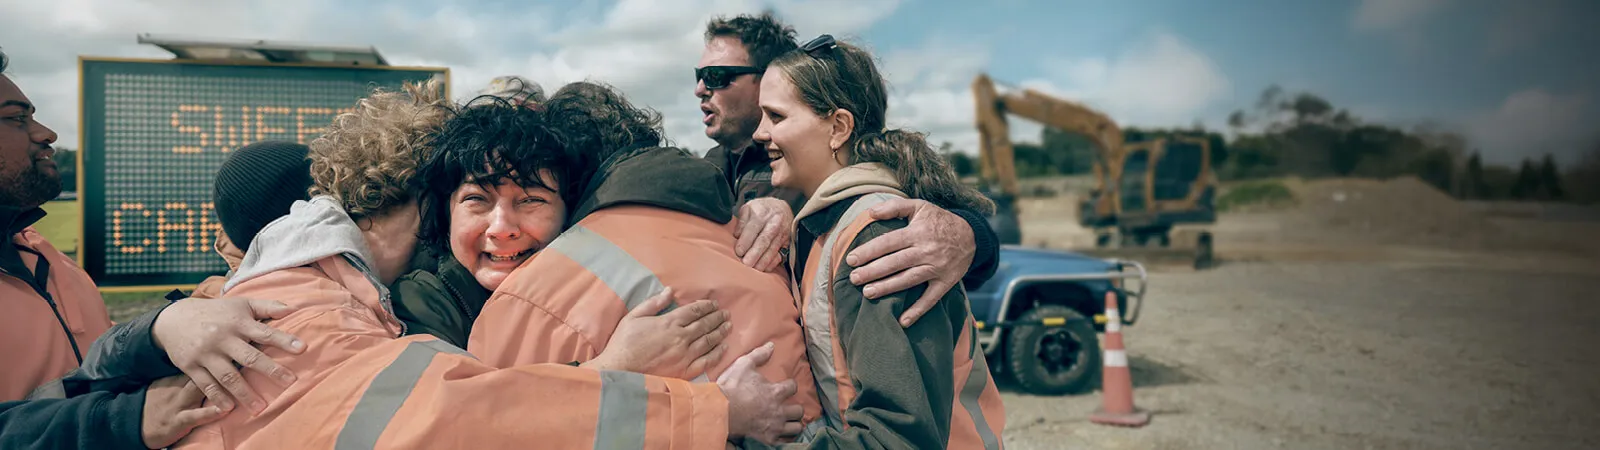 A work crew share a hug together